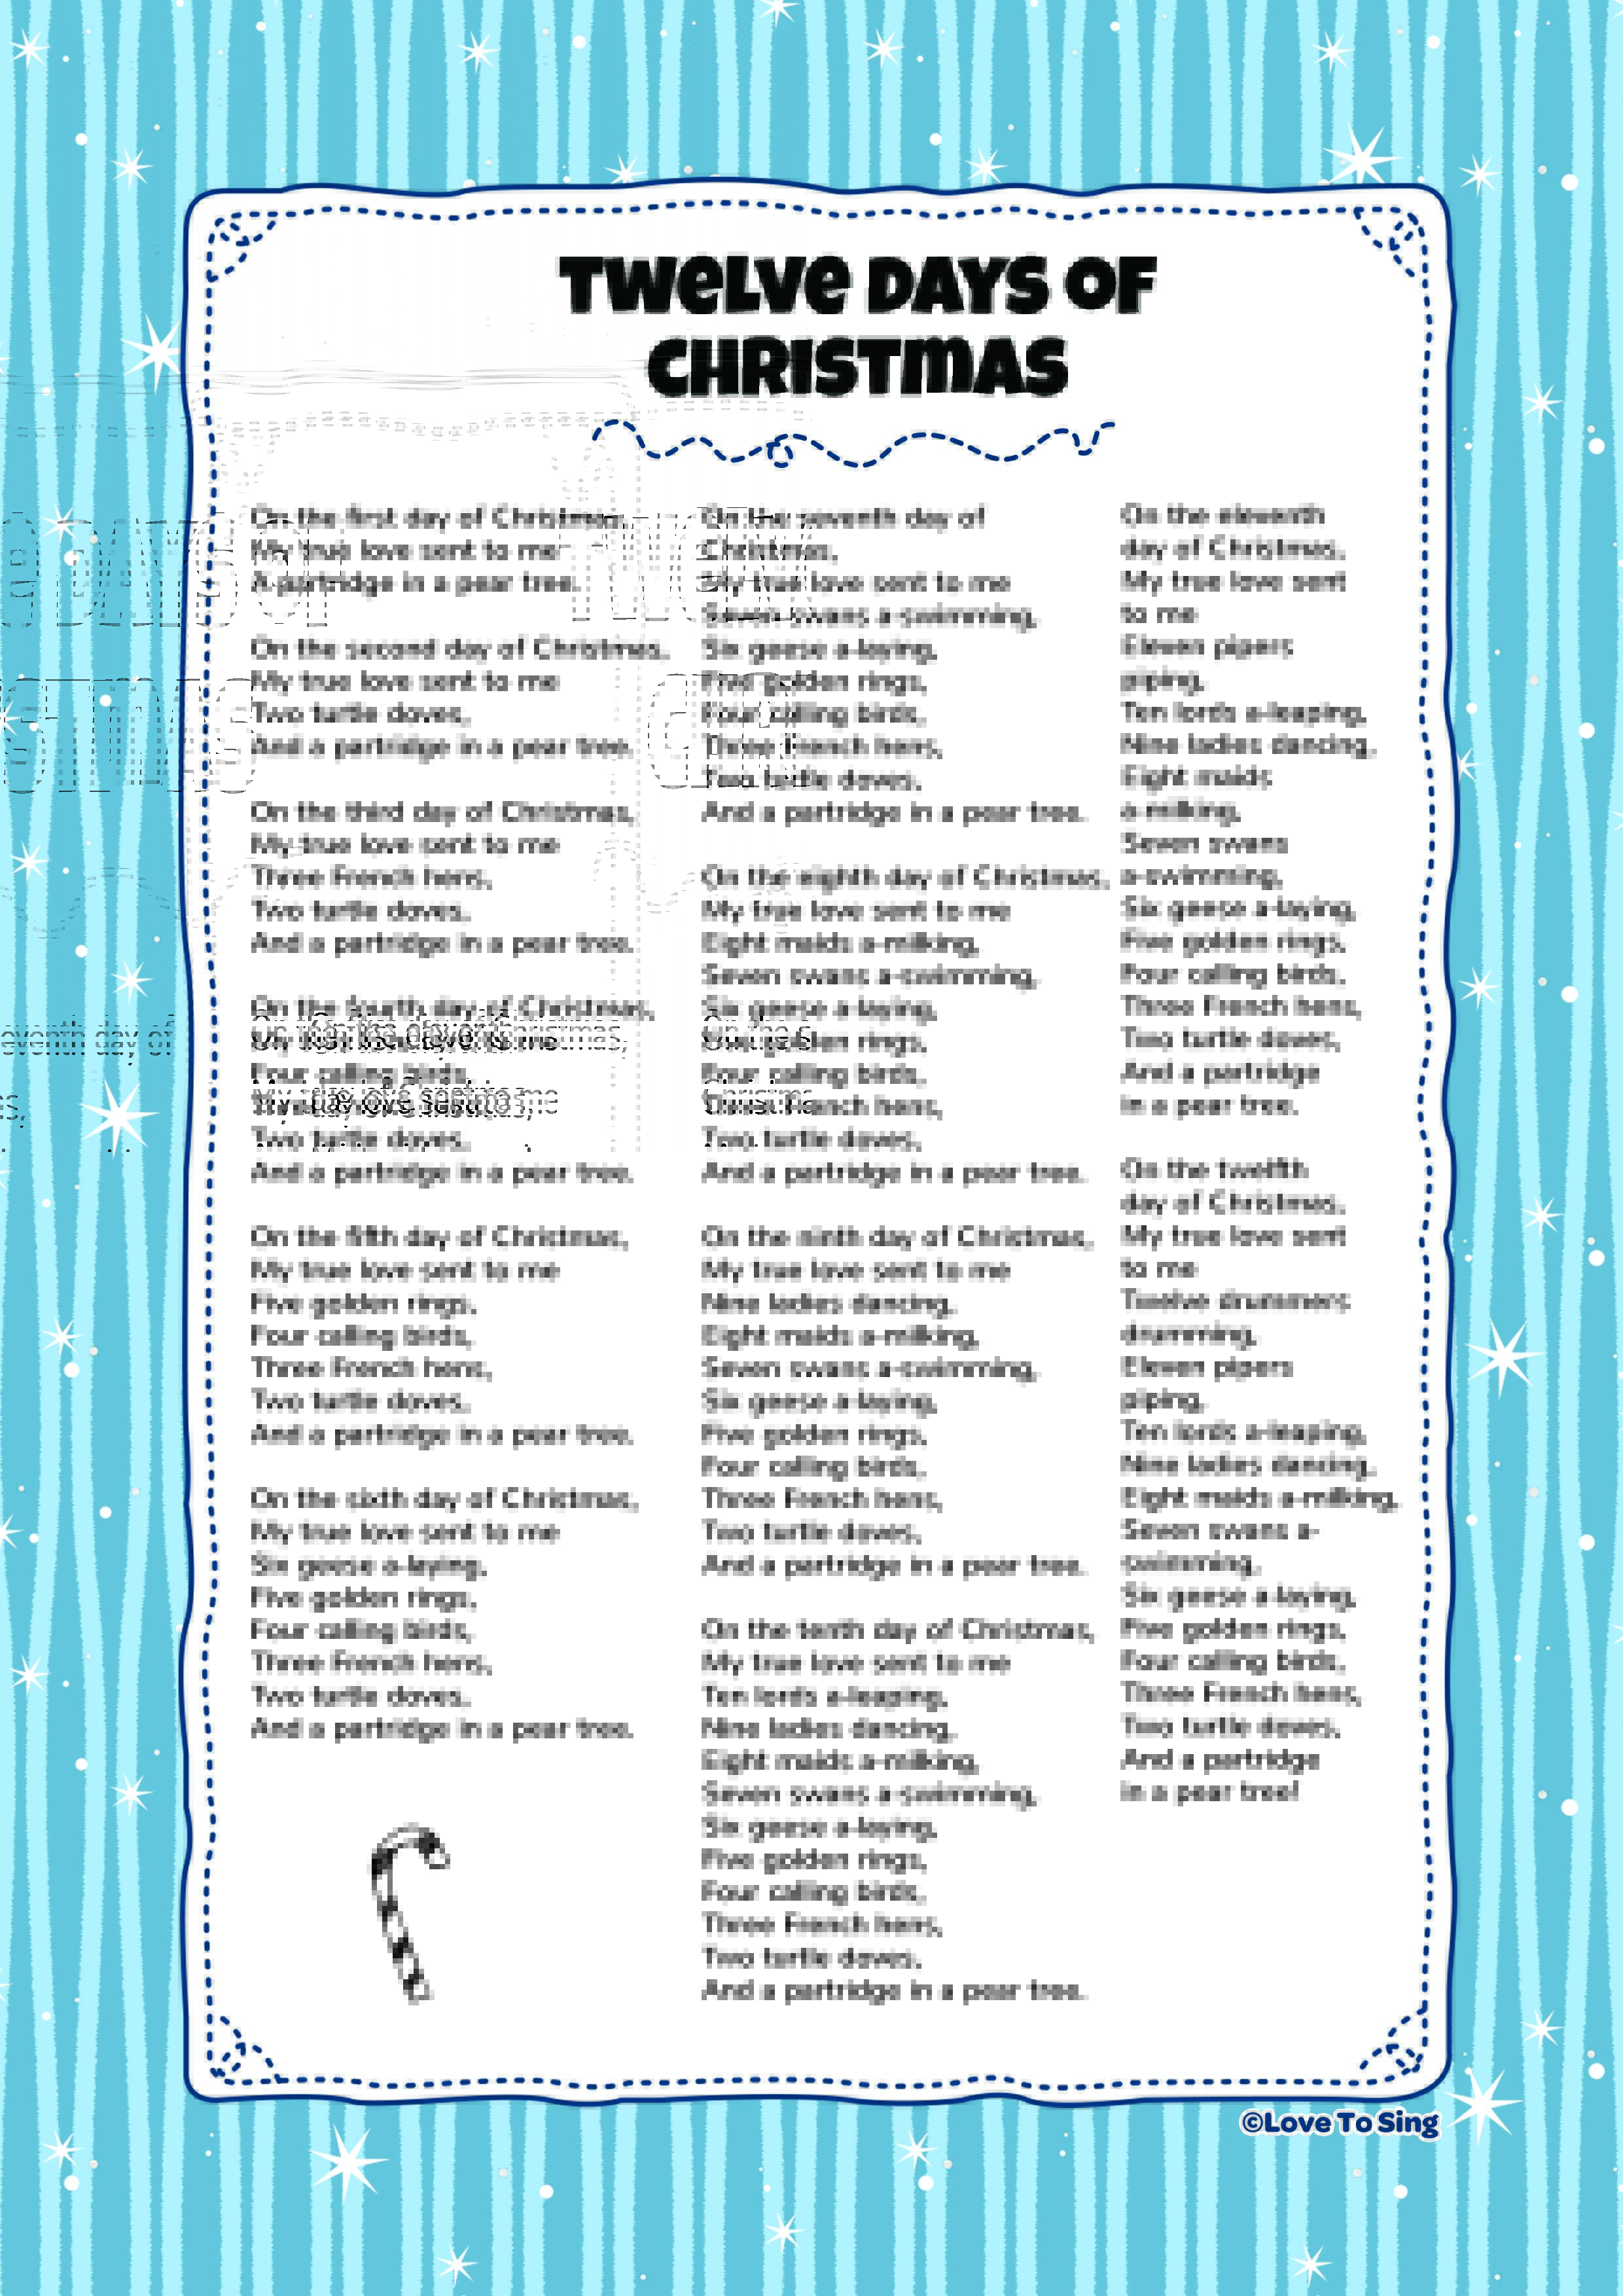 Twelve Days Of Christmas | Kids Video Song with FREE Lyrics & Activities!